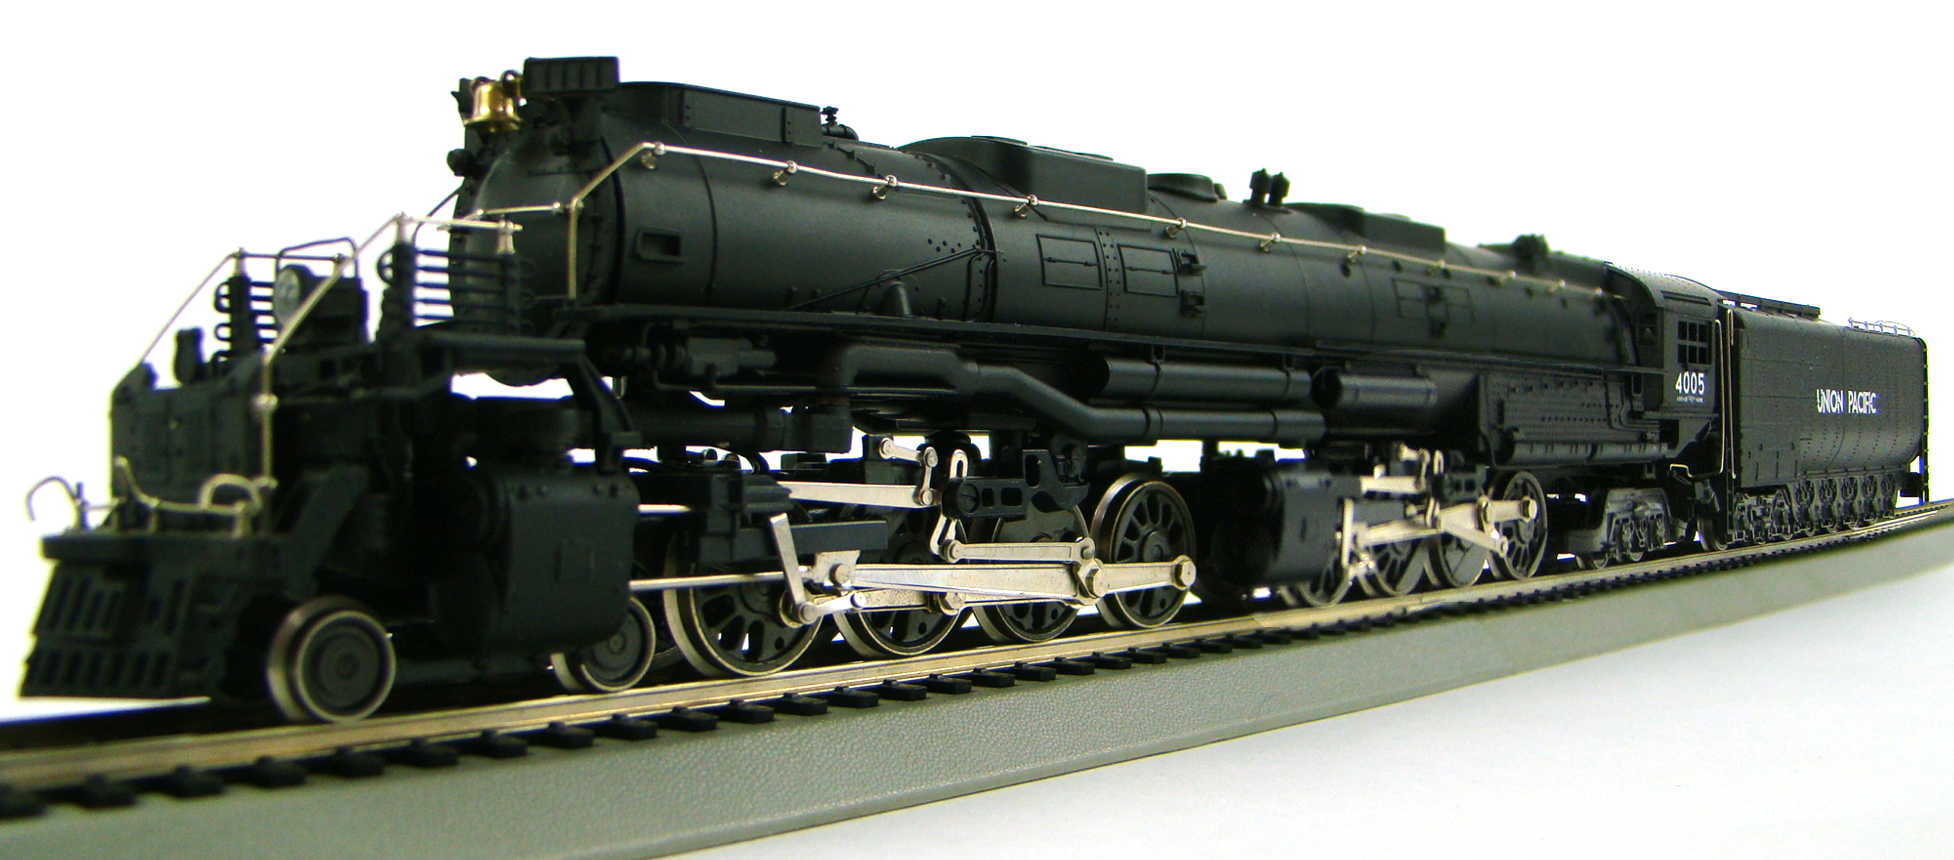 ho scale big boy locomotive